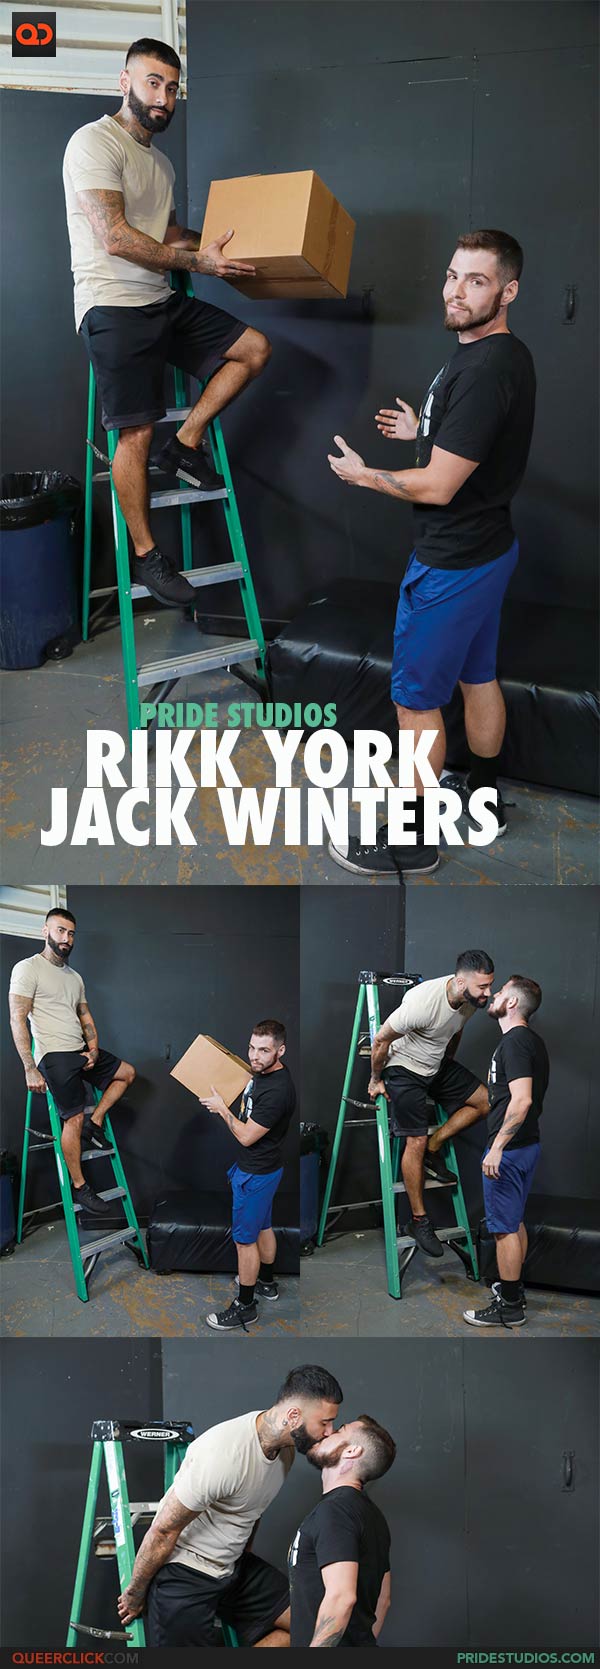 PrideStudios: Rikk York and Jack Winters